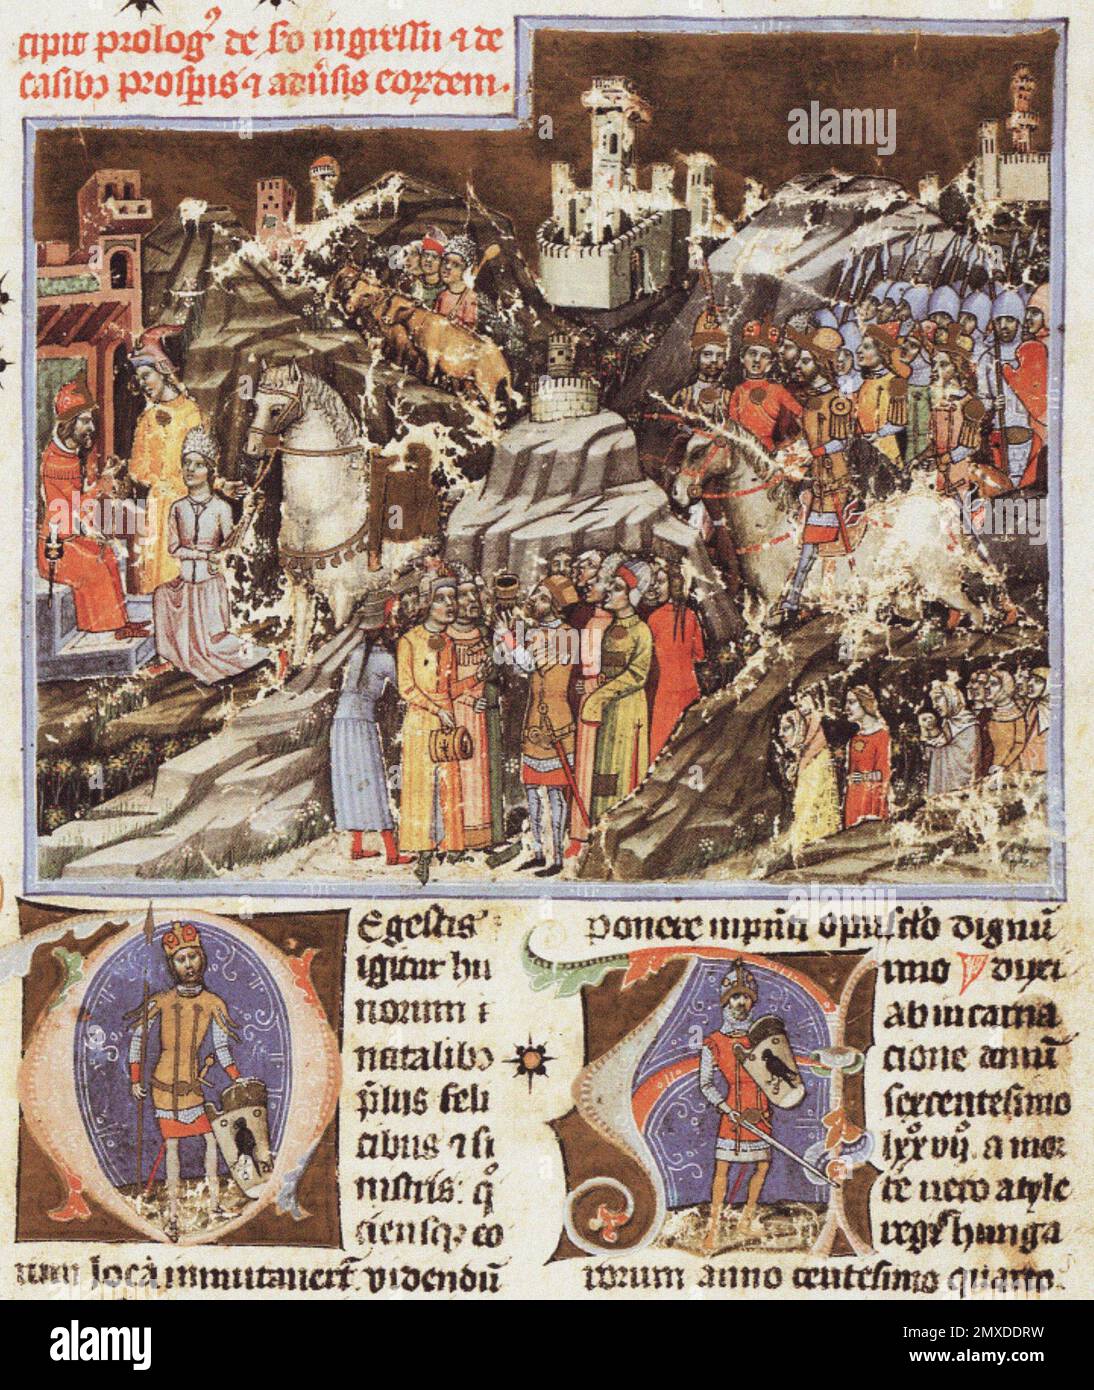 Hungarian conquest of the Carpathian Basin. Miniature from the Chronicon Pictum. Museum: Orszagos Szechenyi Konyvtar, Budapest. Author: Mark of Kalt (Kalti Mark). Stock Photo